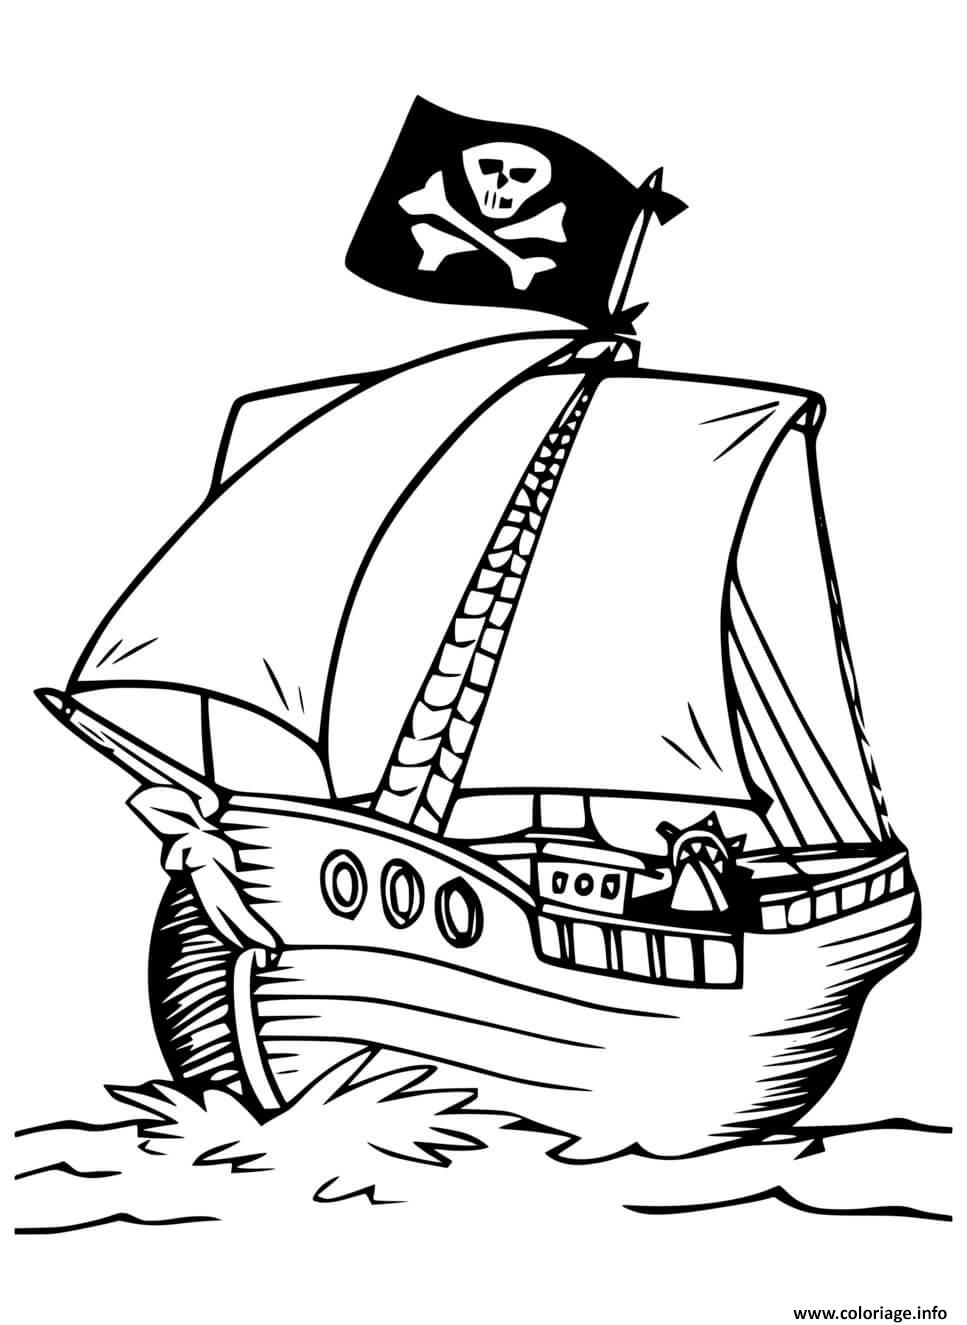 Dessin pirate bateau simple Coloriage Gratuit à Imprimer